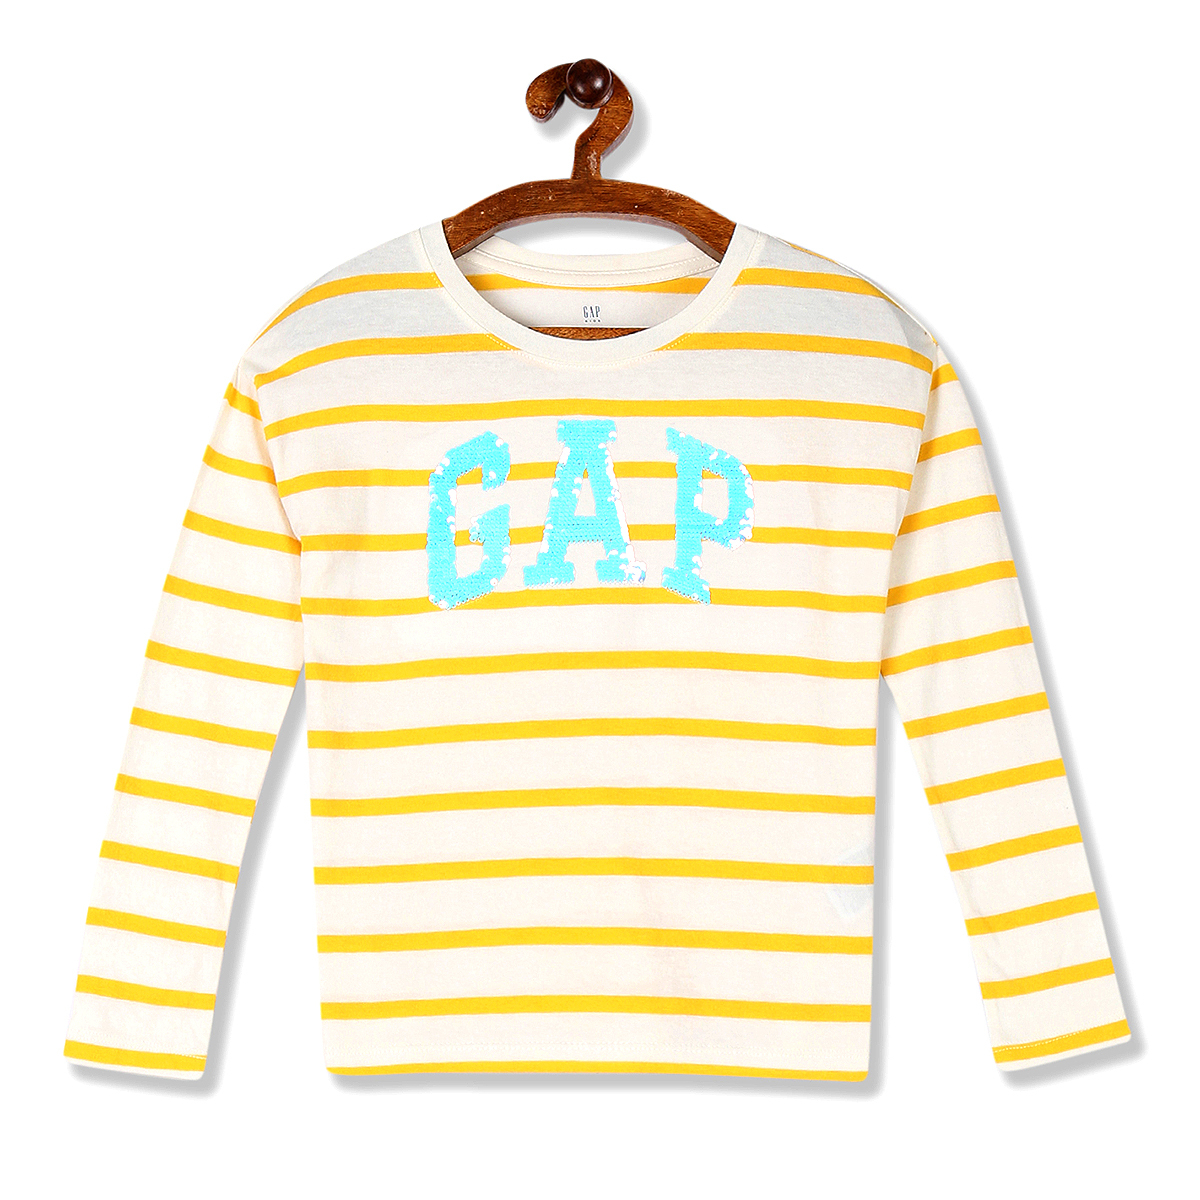 Gap Kids Boys T-Shirt, Royal Yellow